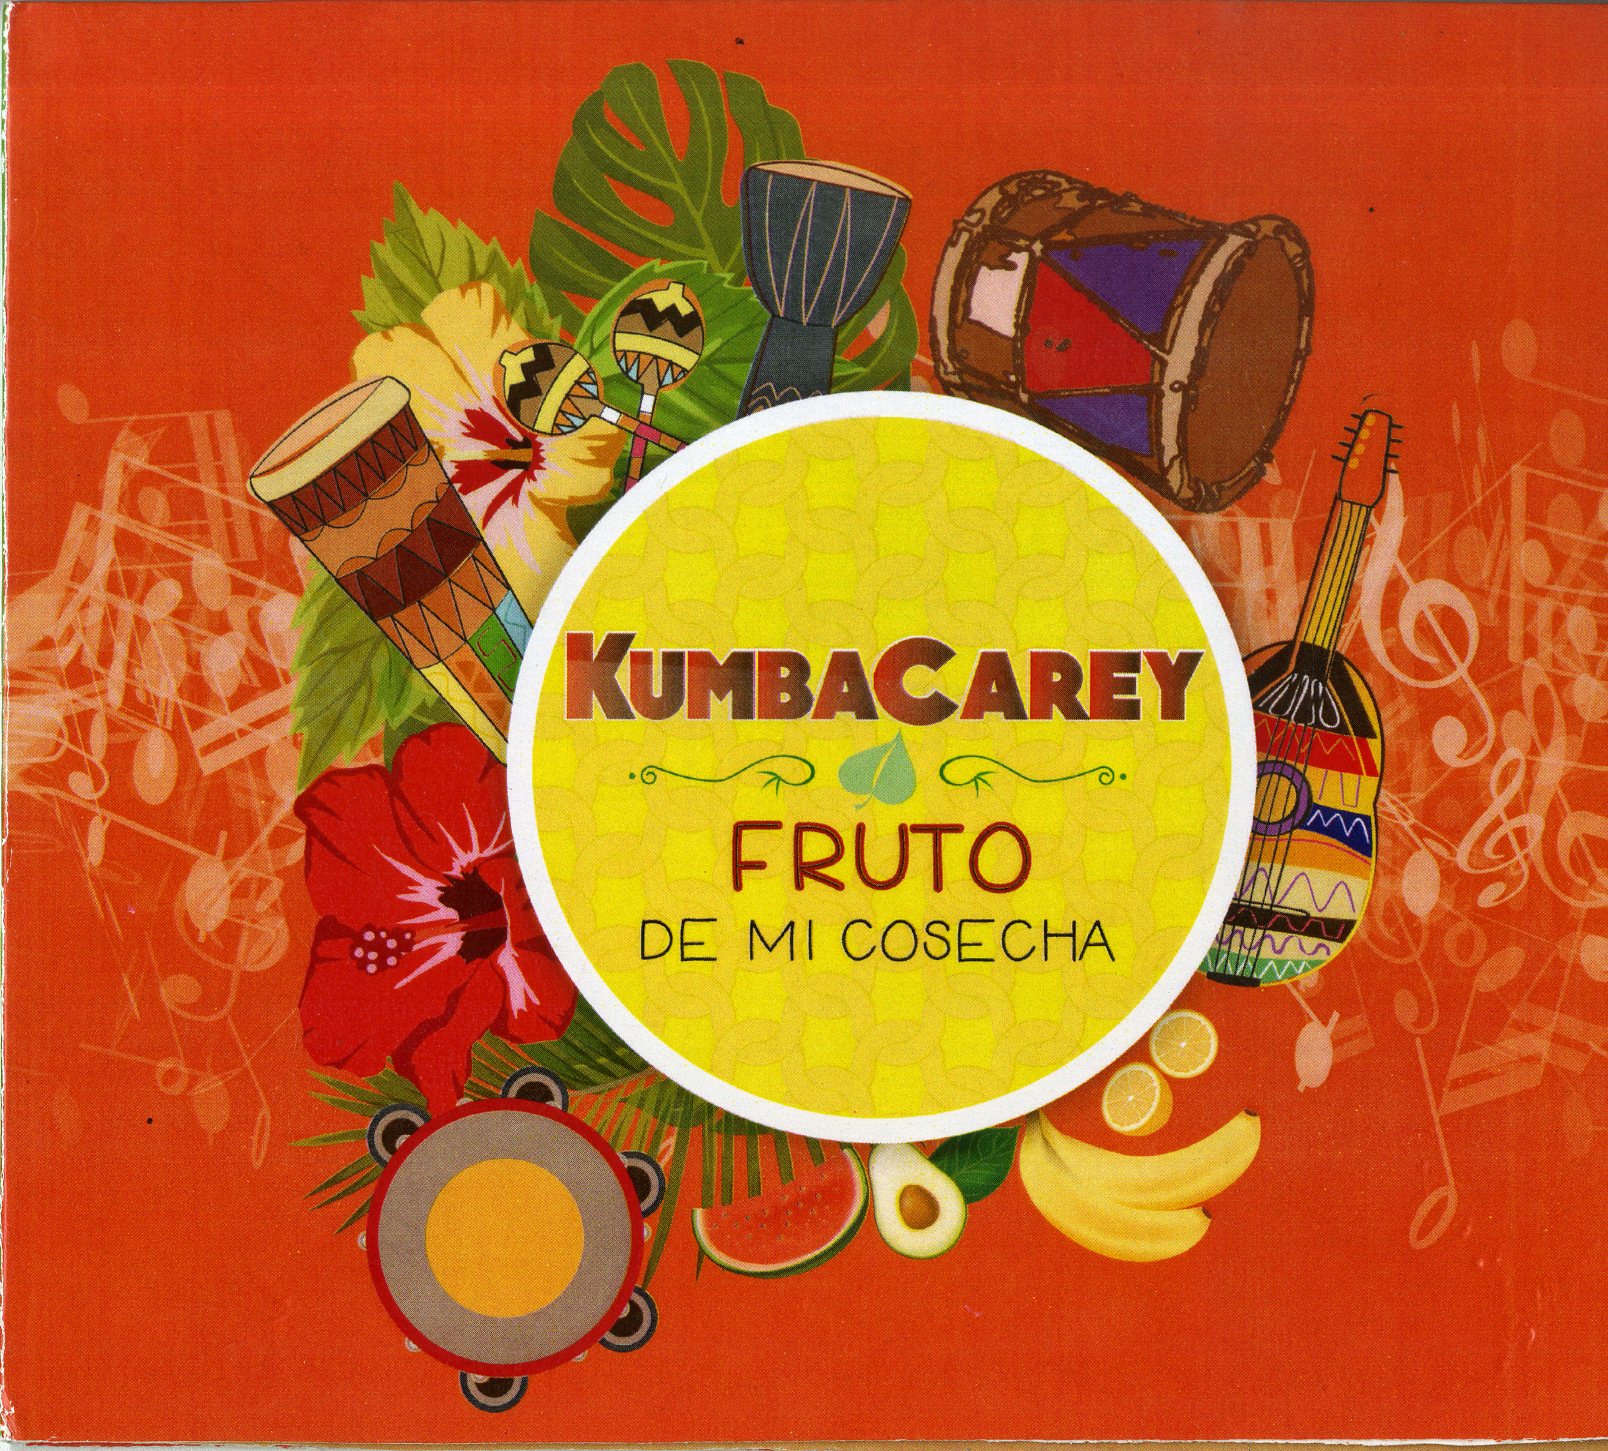 KumbaCarey Fruto de mi Cosecha CD album cover, ca. 2016